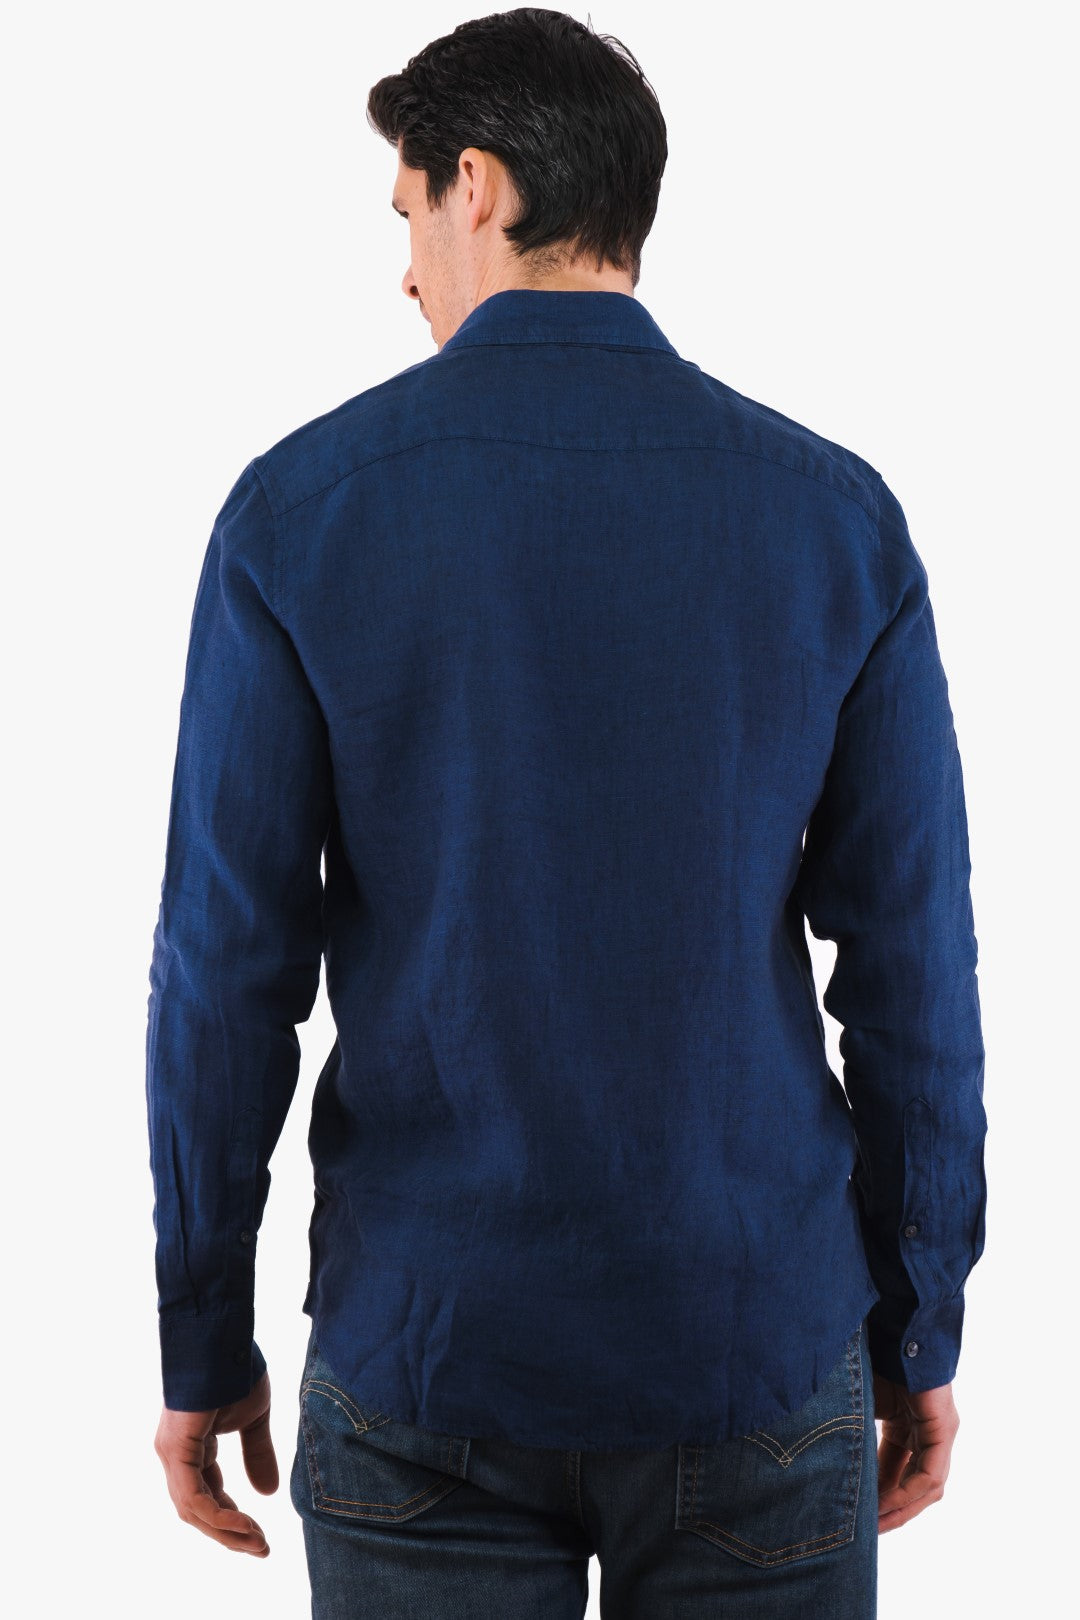 Michael Kors Linen Shirt in Midnight color